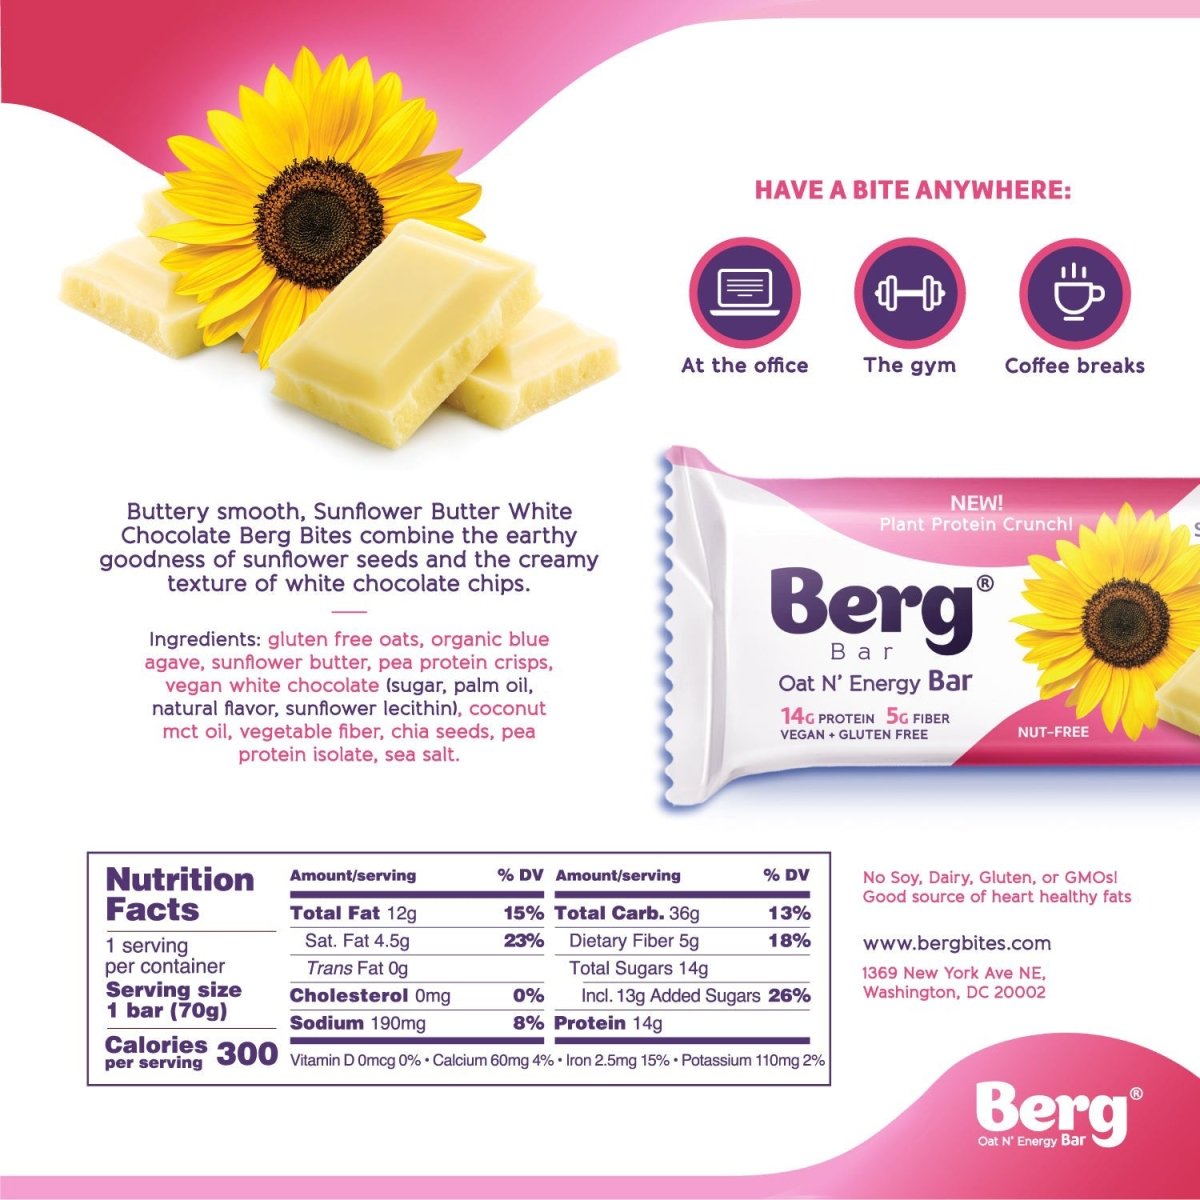 Berg Bar Sunflower Butter White Chocolate - Plant Protein Crunch - Box of 8 - Berg Bites - Clean Energy